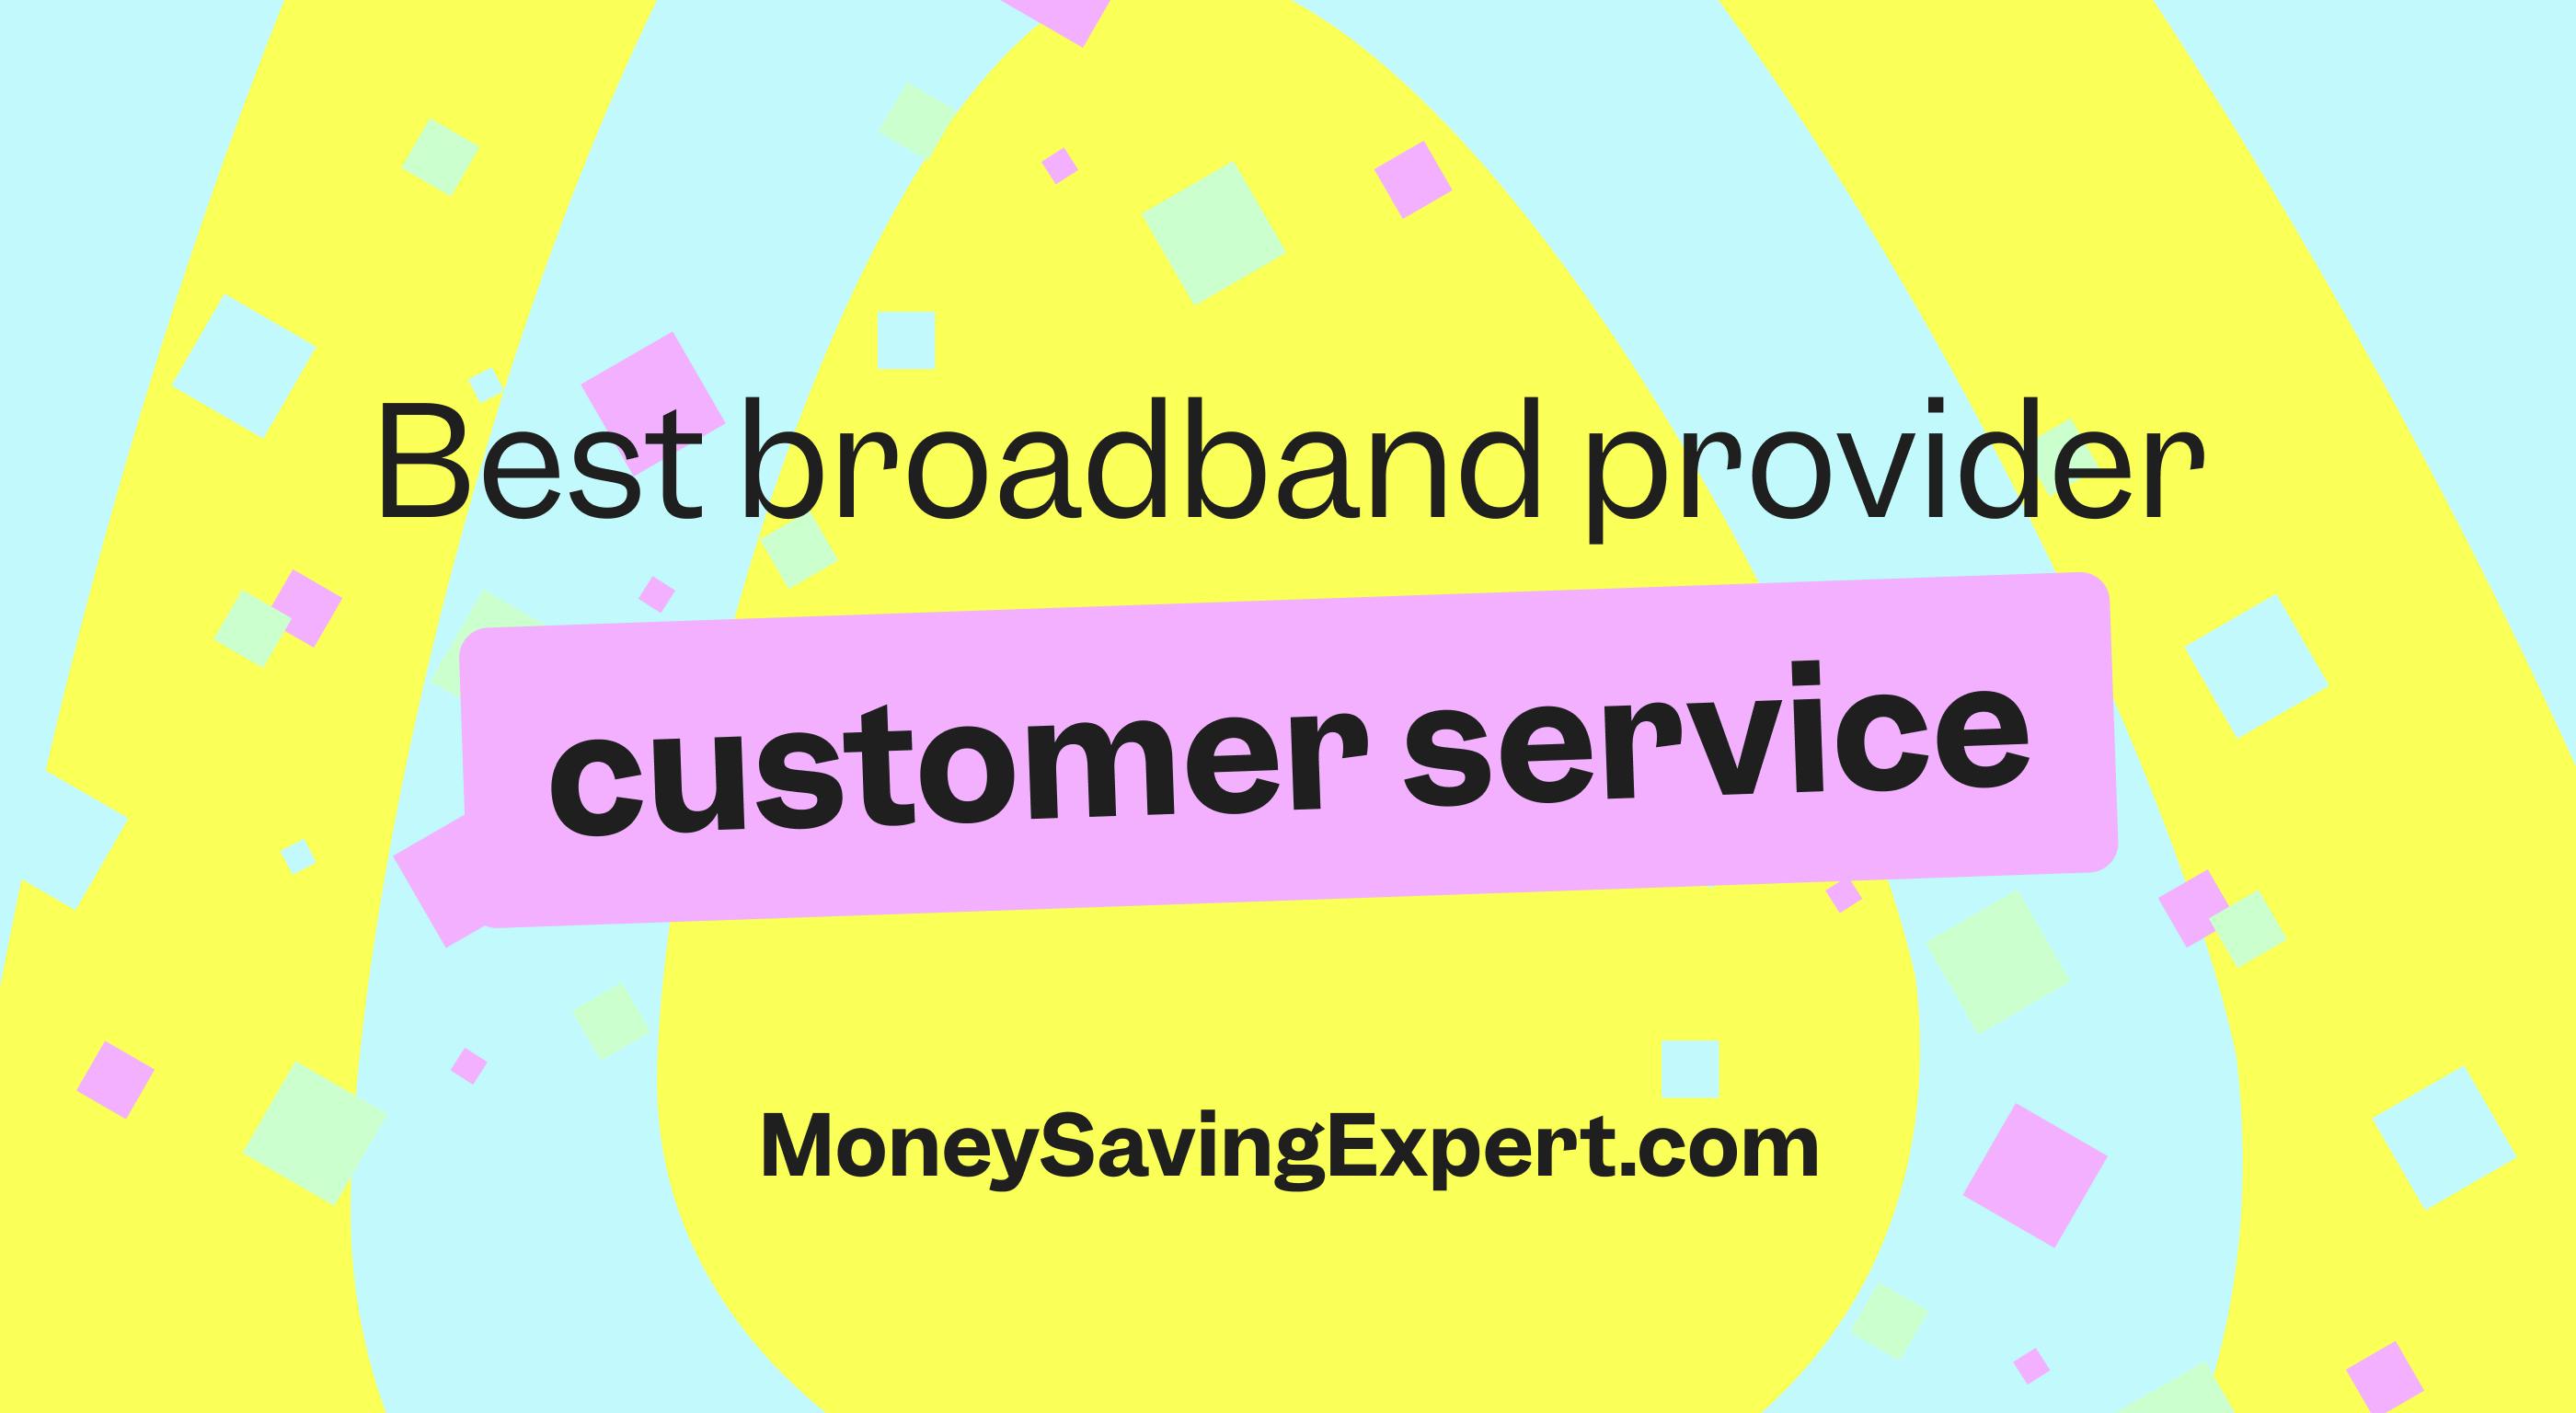 Cuckoo voted best broadband provider for customer service - Feb 22